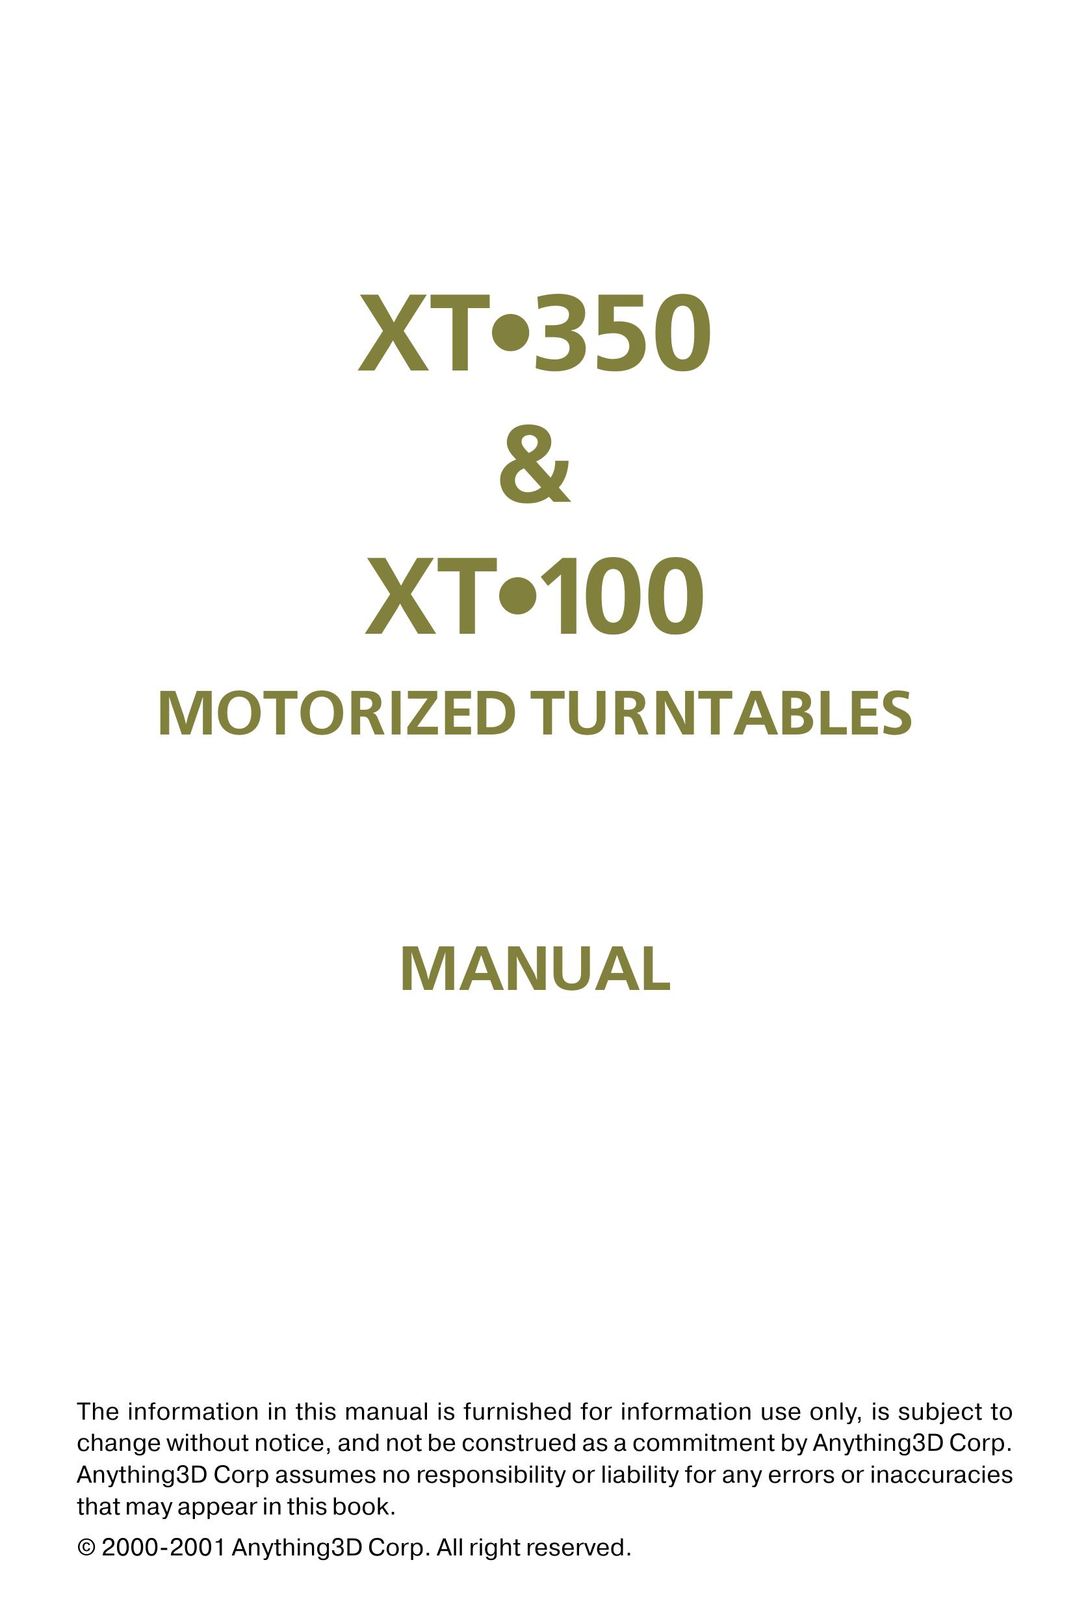 Nikon XT350 Turntable User Manual